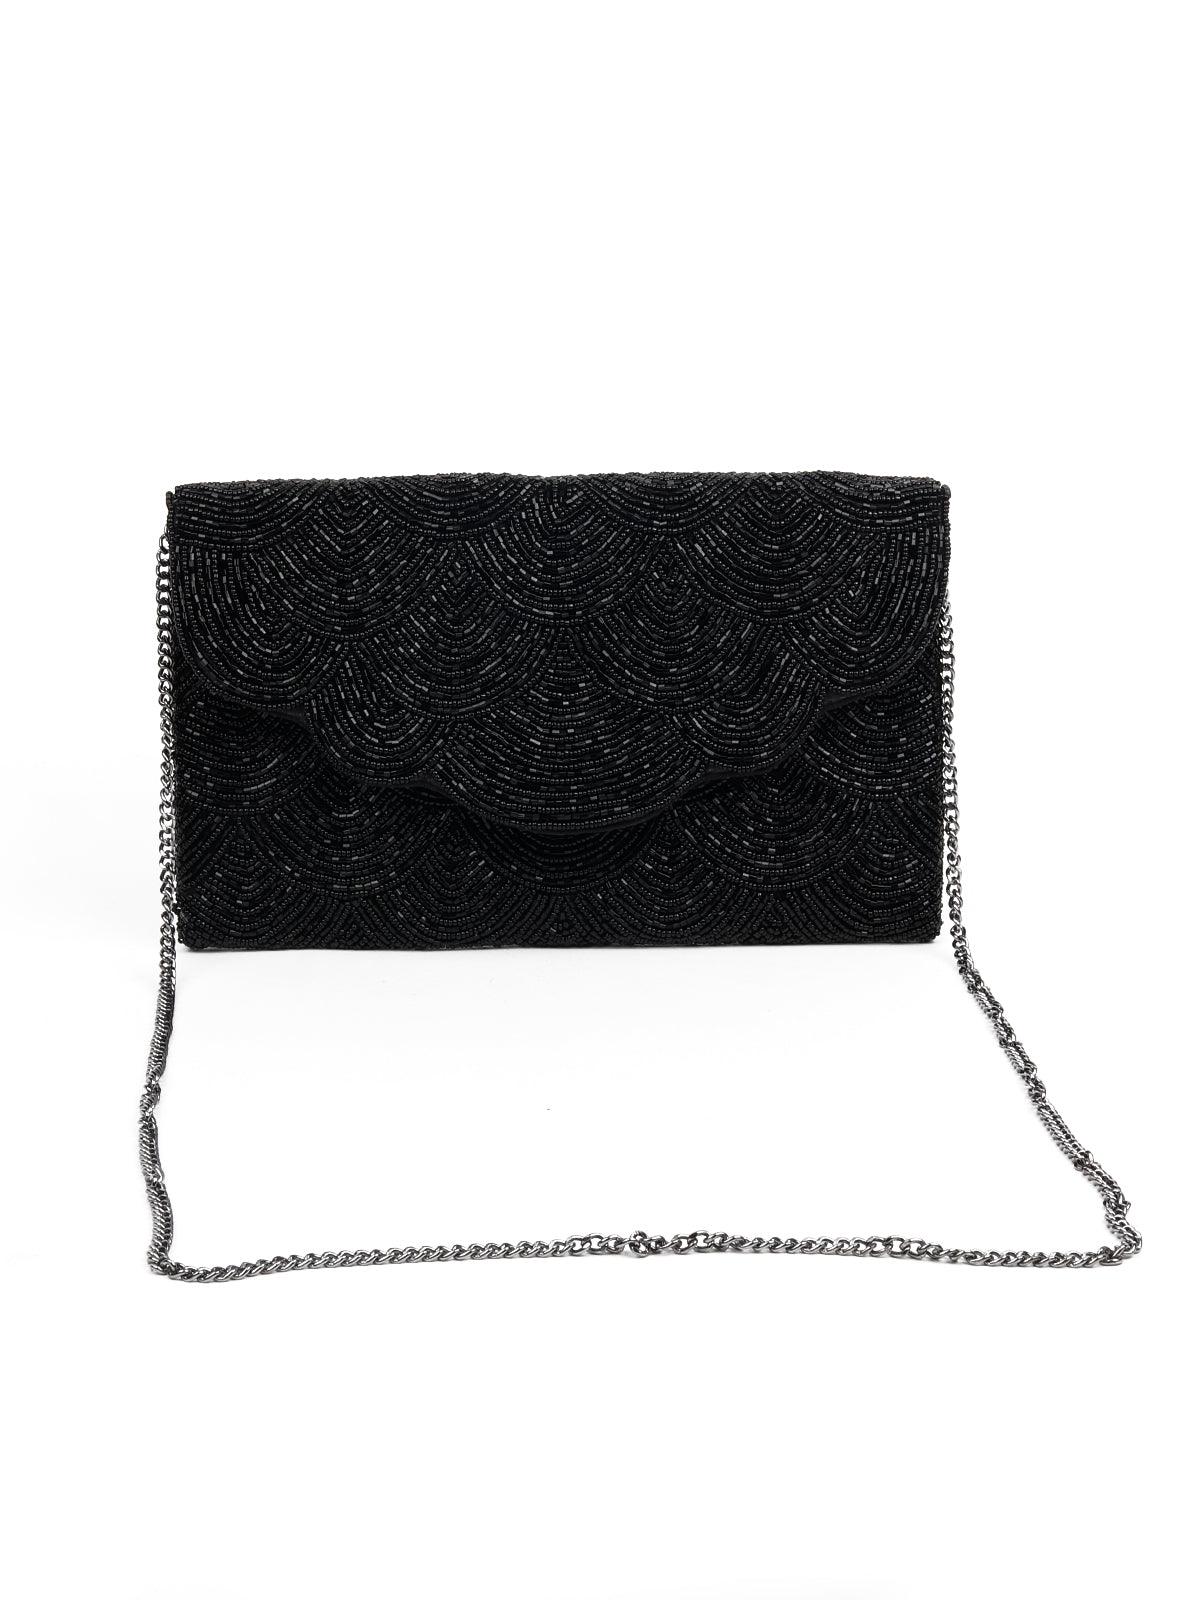 Peora Black Clutch Purses for Women Handmade Evening Sling Handbag Stylish  Bridal Fashion Clutch Bag for Girls (C127BL) : Amazon.in: Fashion